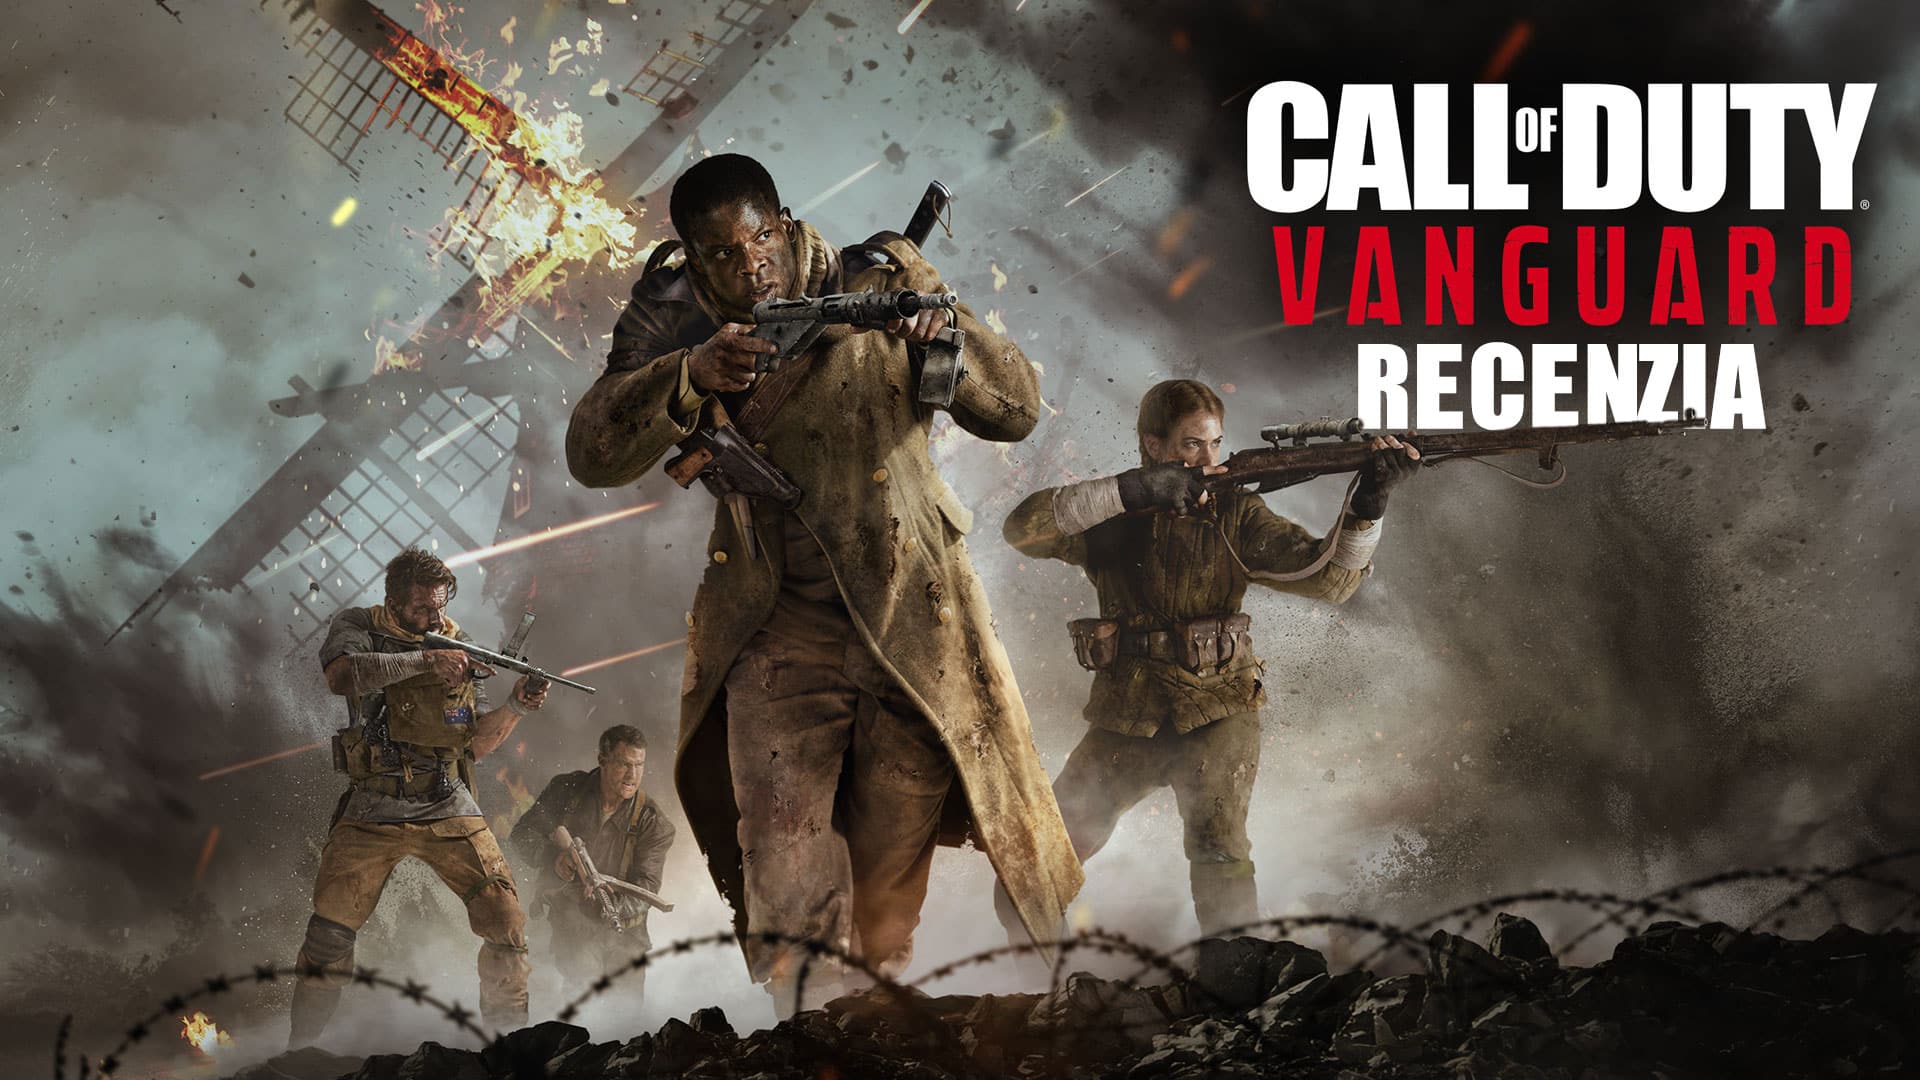 Call of Duty: Vanguard recenzia